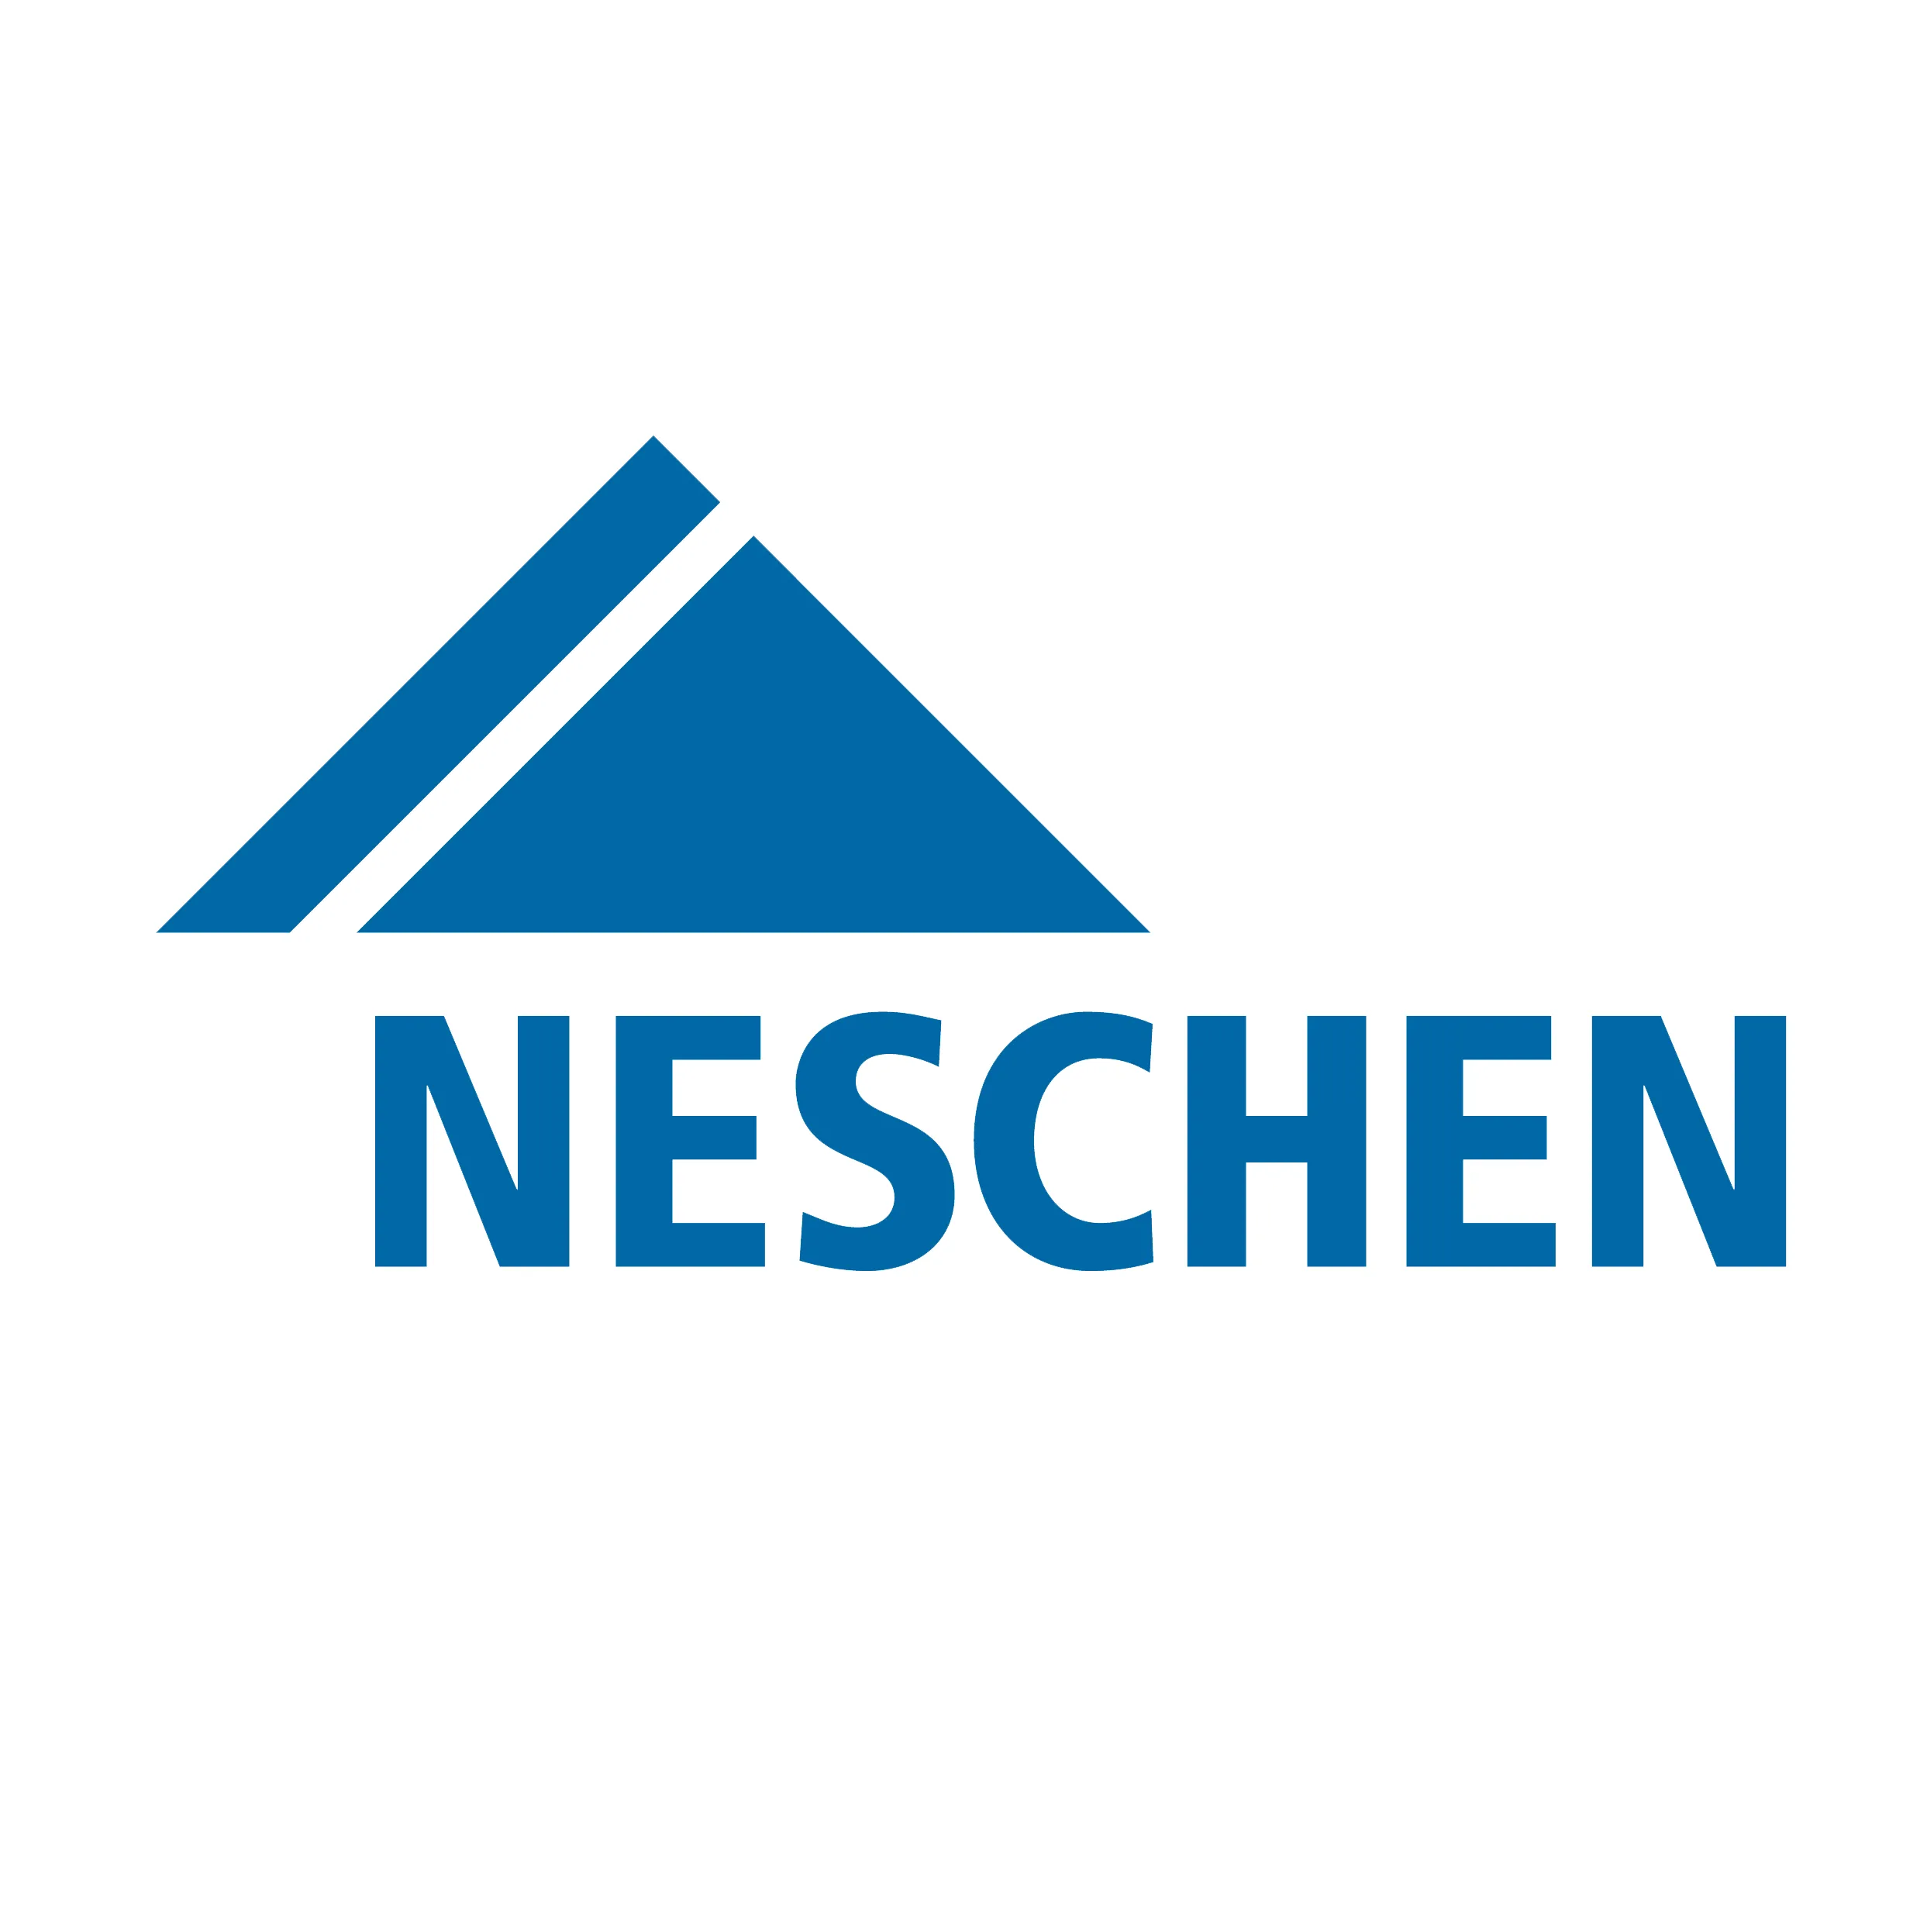 Neschen logo_result